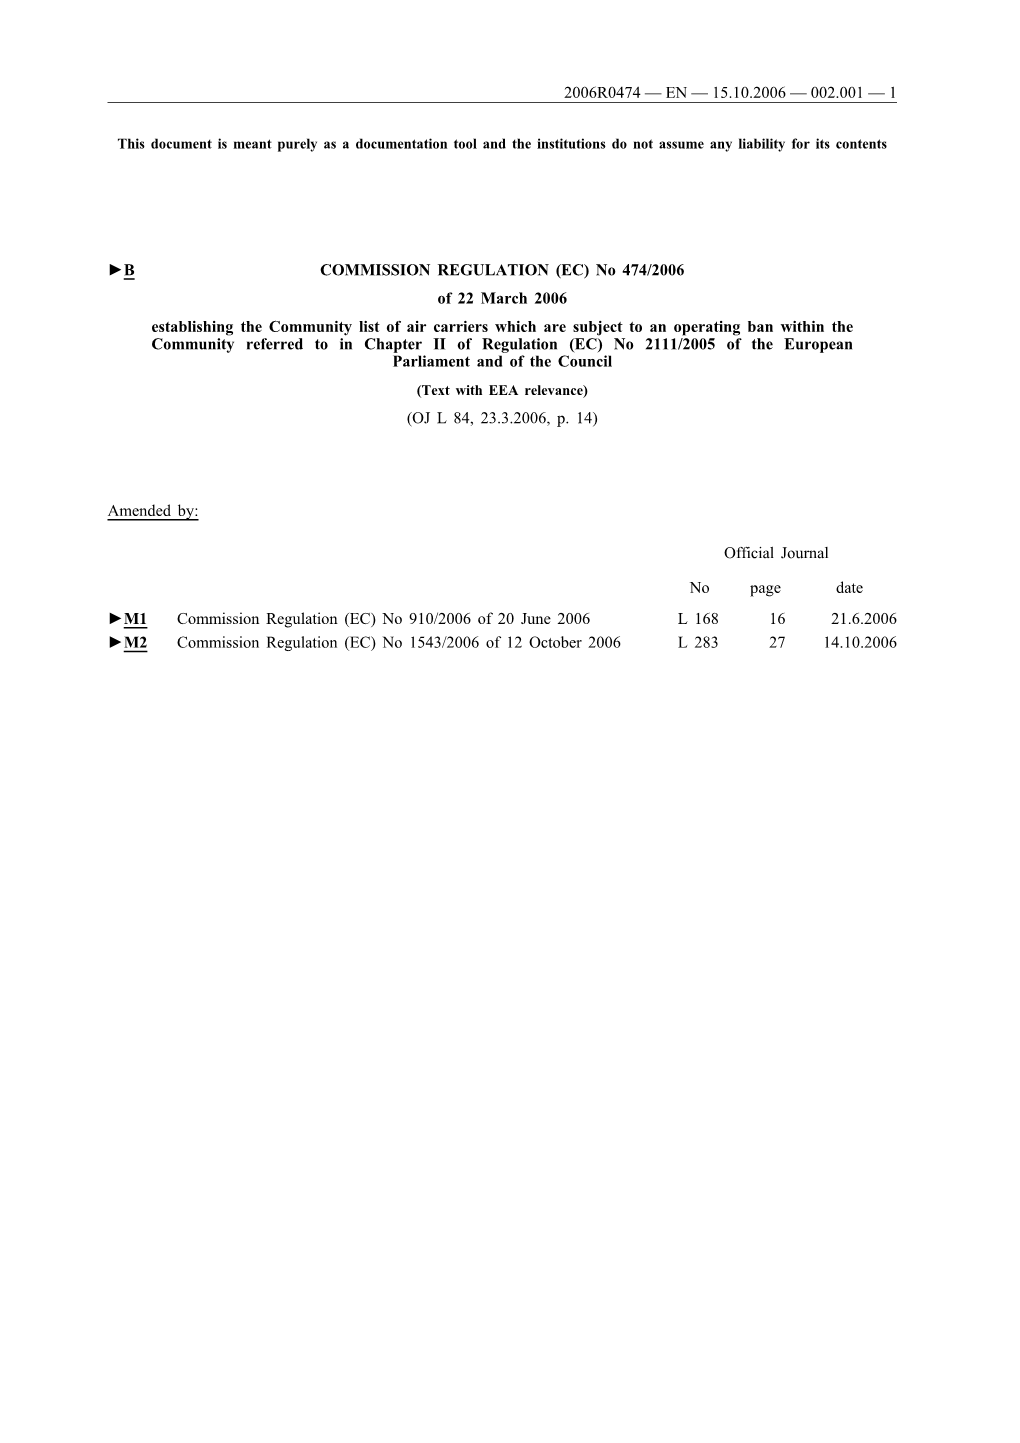 B COMMISSION REGULATION (EC) No 474